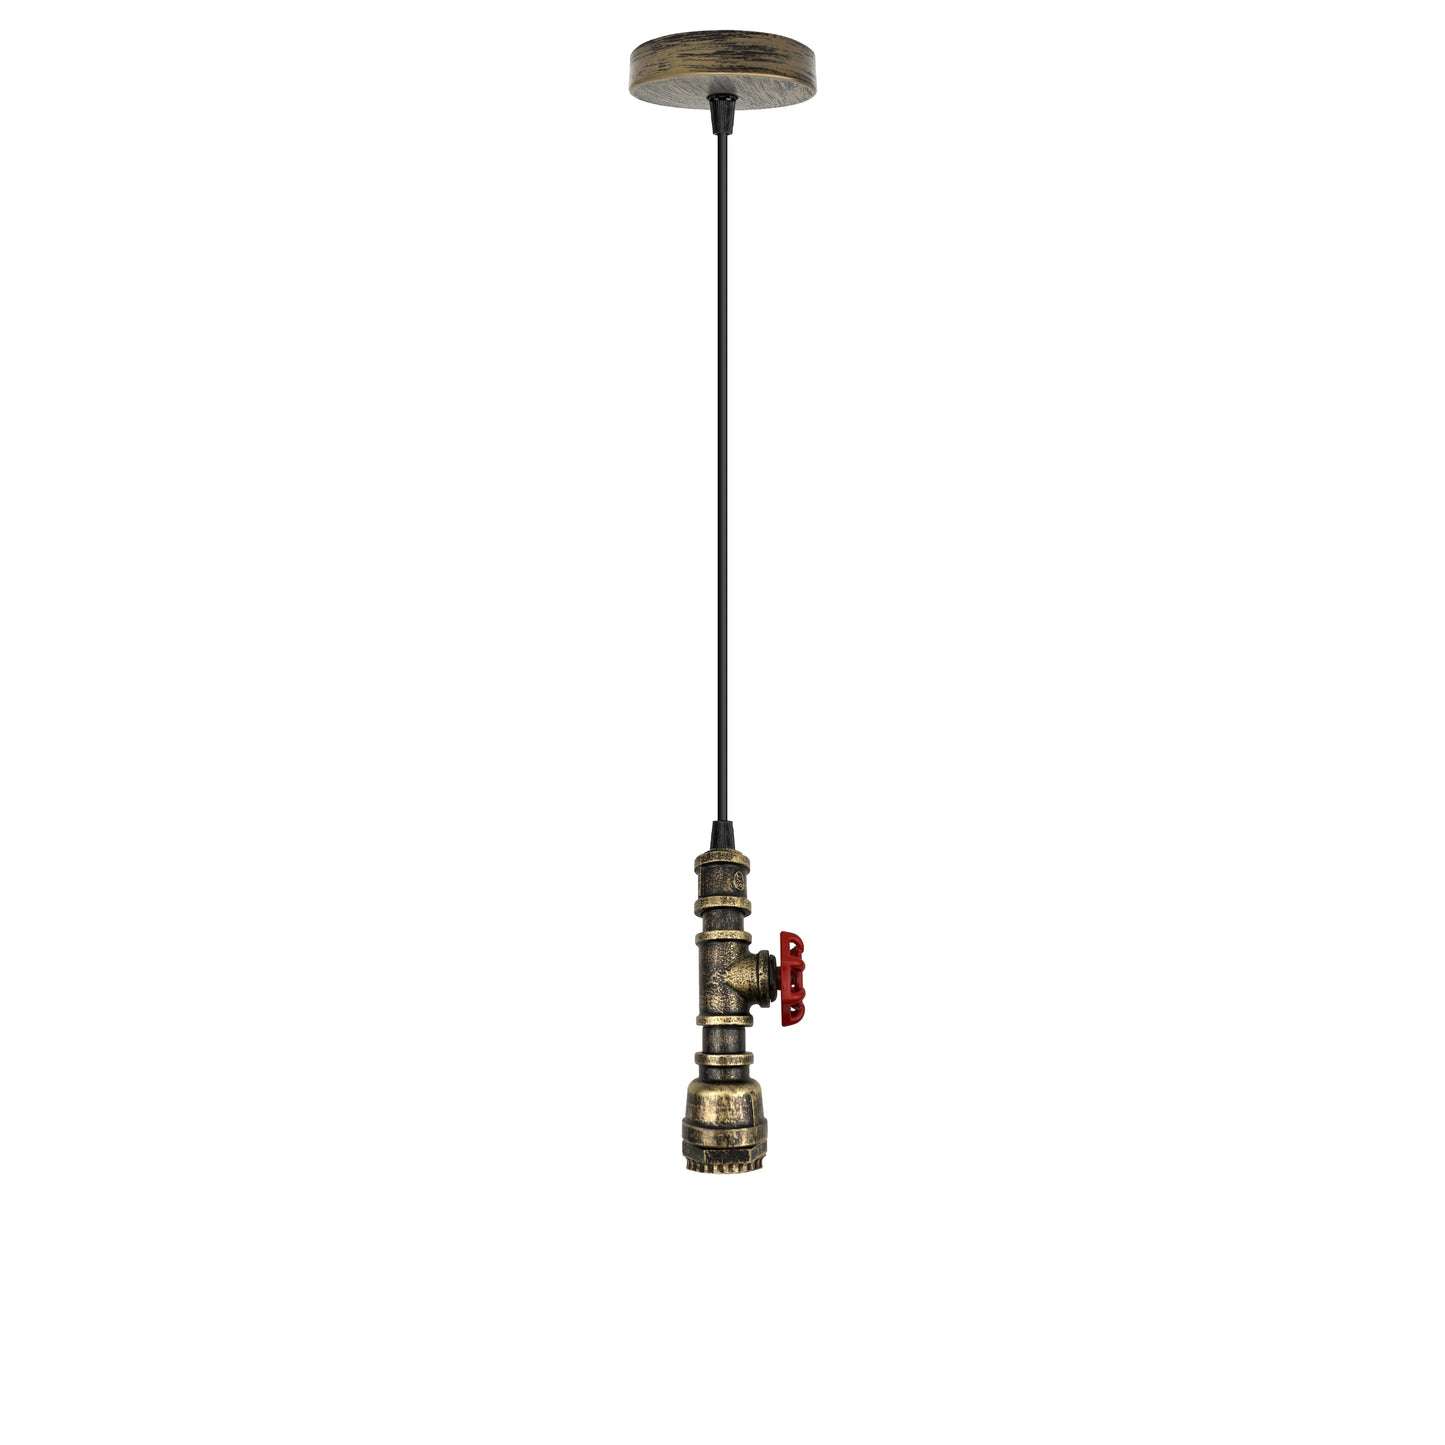 Vintage Industrial Hanging Metal Ceiling Pendant  Adjustable Cable For Living Kitchen Restaurant.